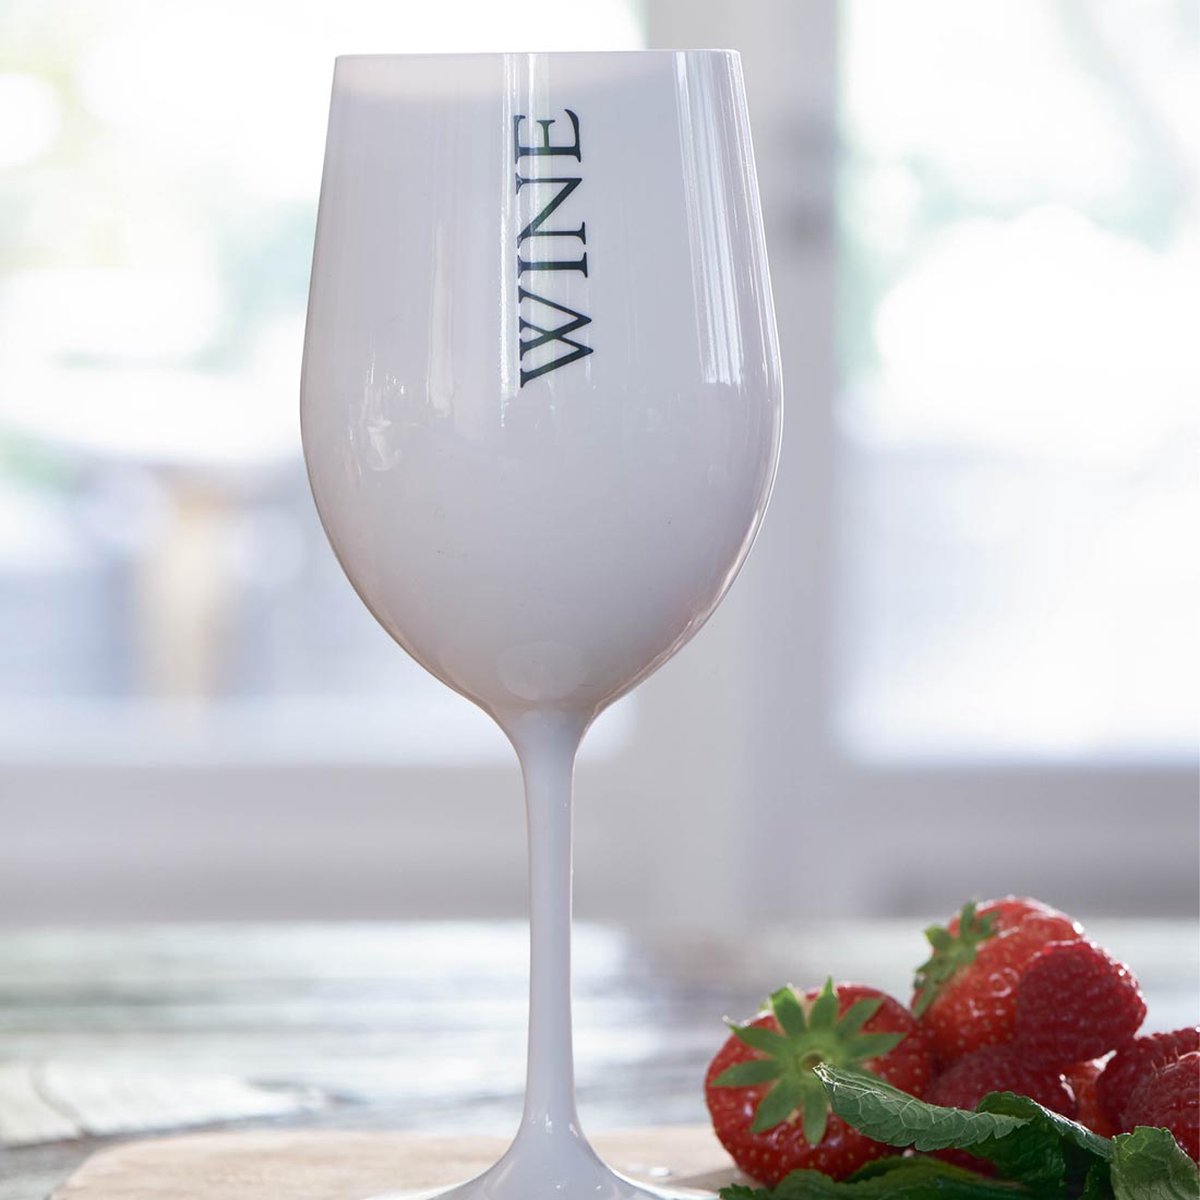 Riviera Maison Witte Wijn - Summer Wine Glass - Wit - 1 Wijnglas | bol.com